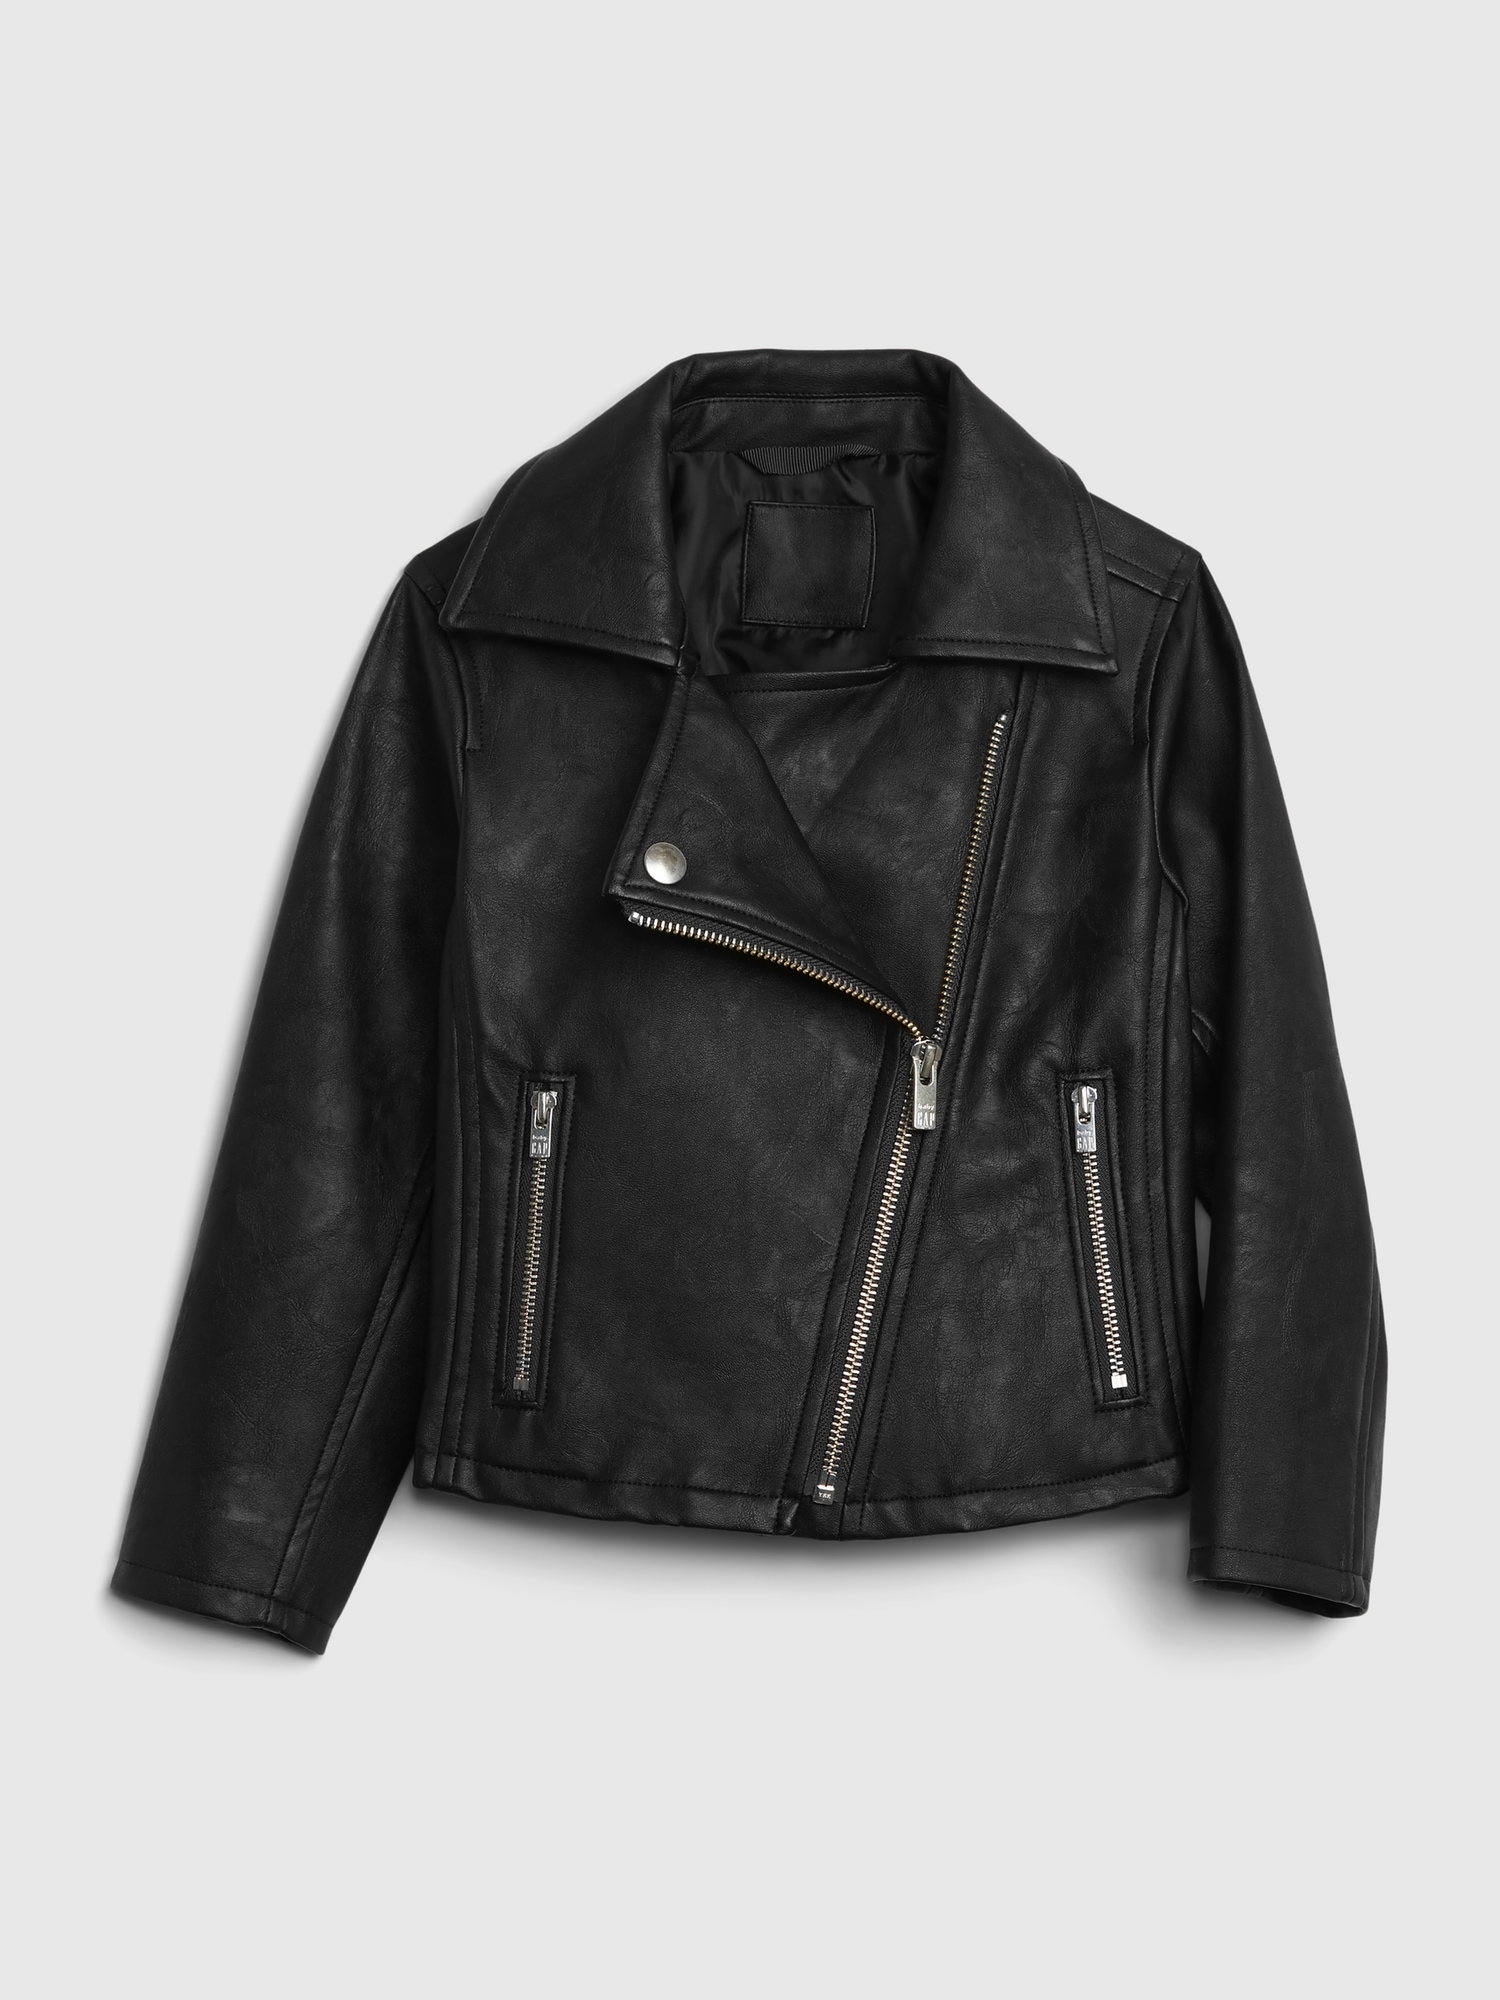 gap leather biker jacket